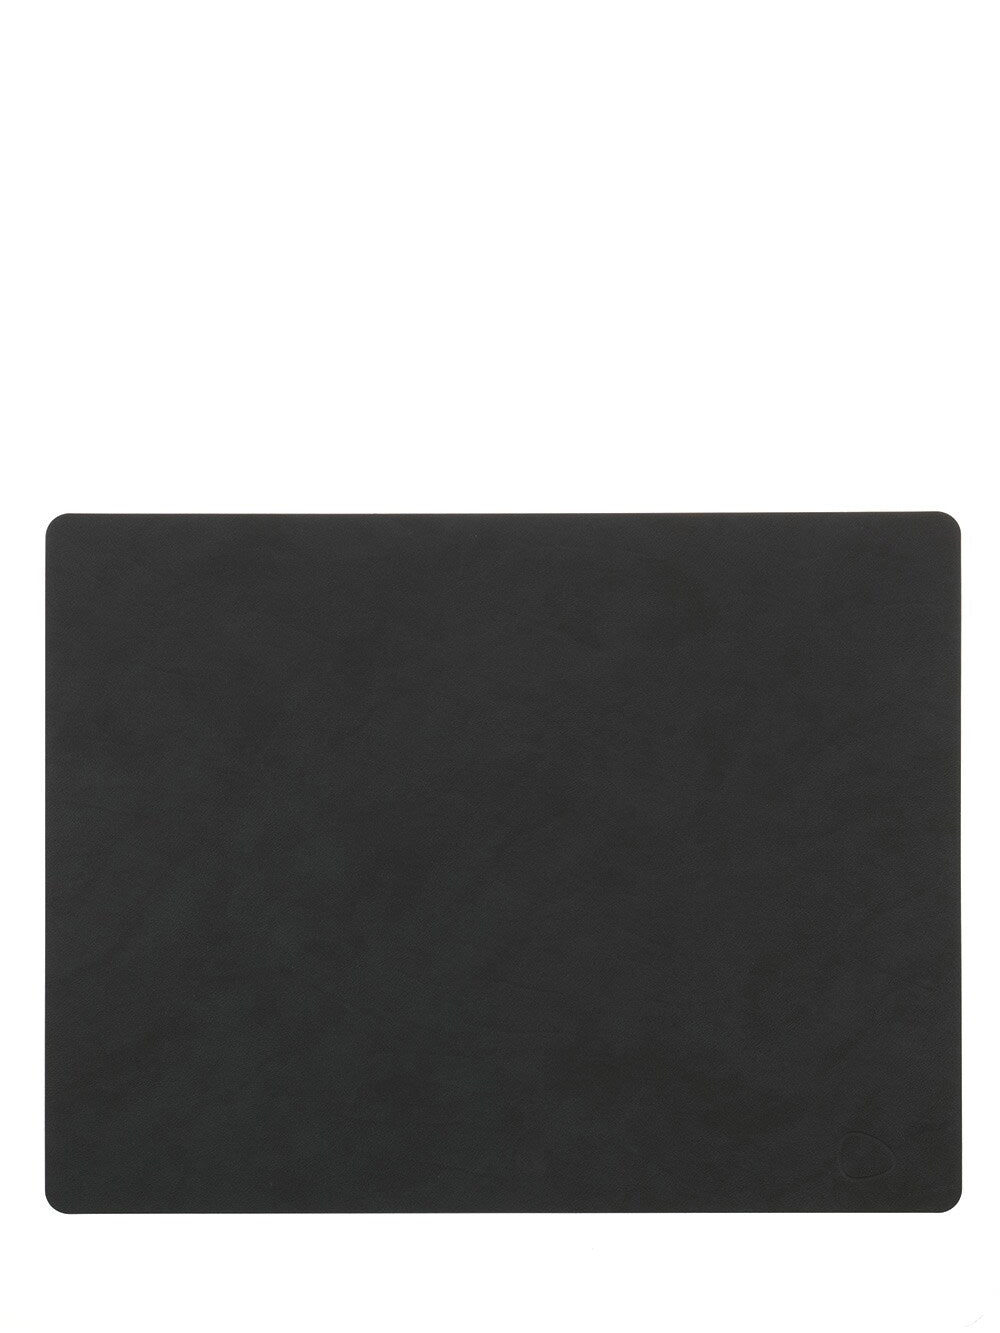 Leather Table Mat Square, black